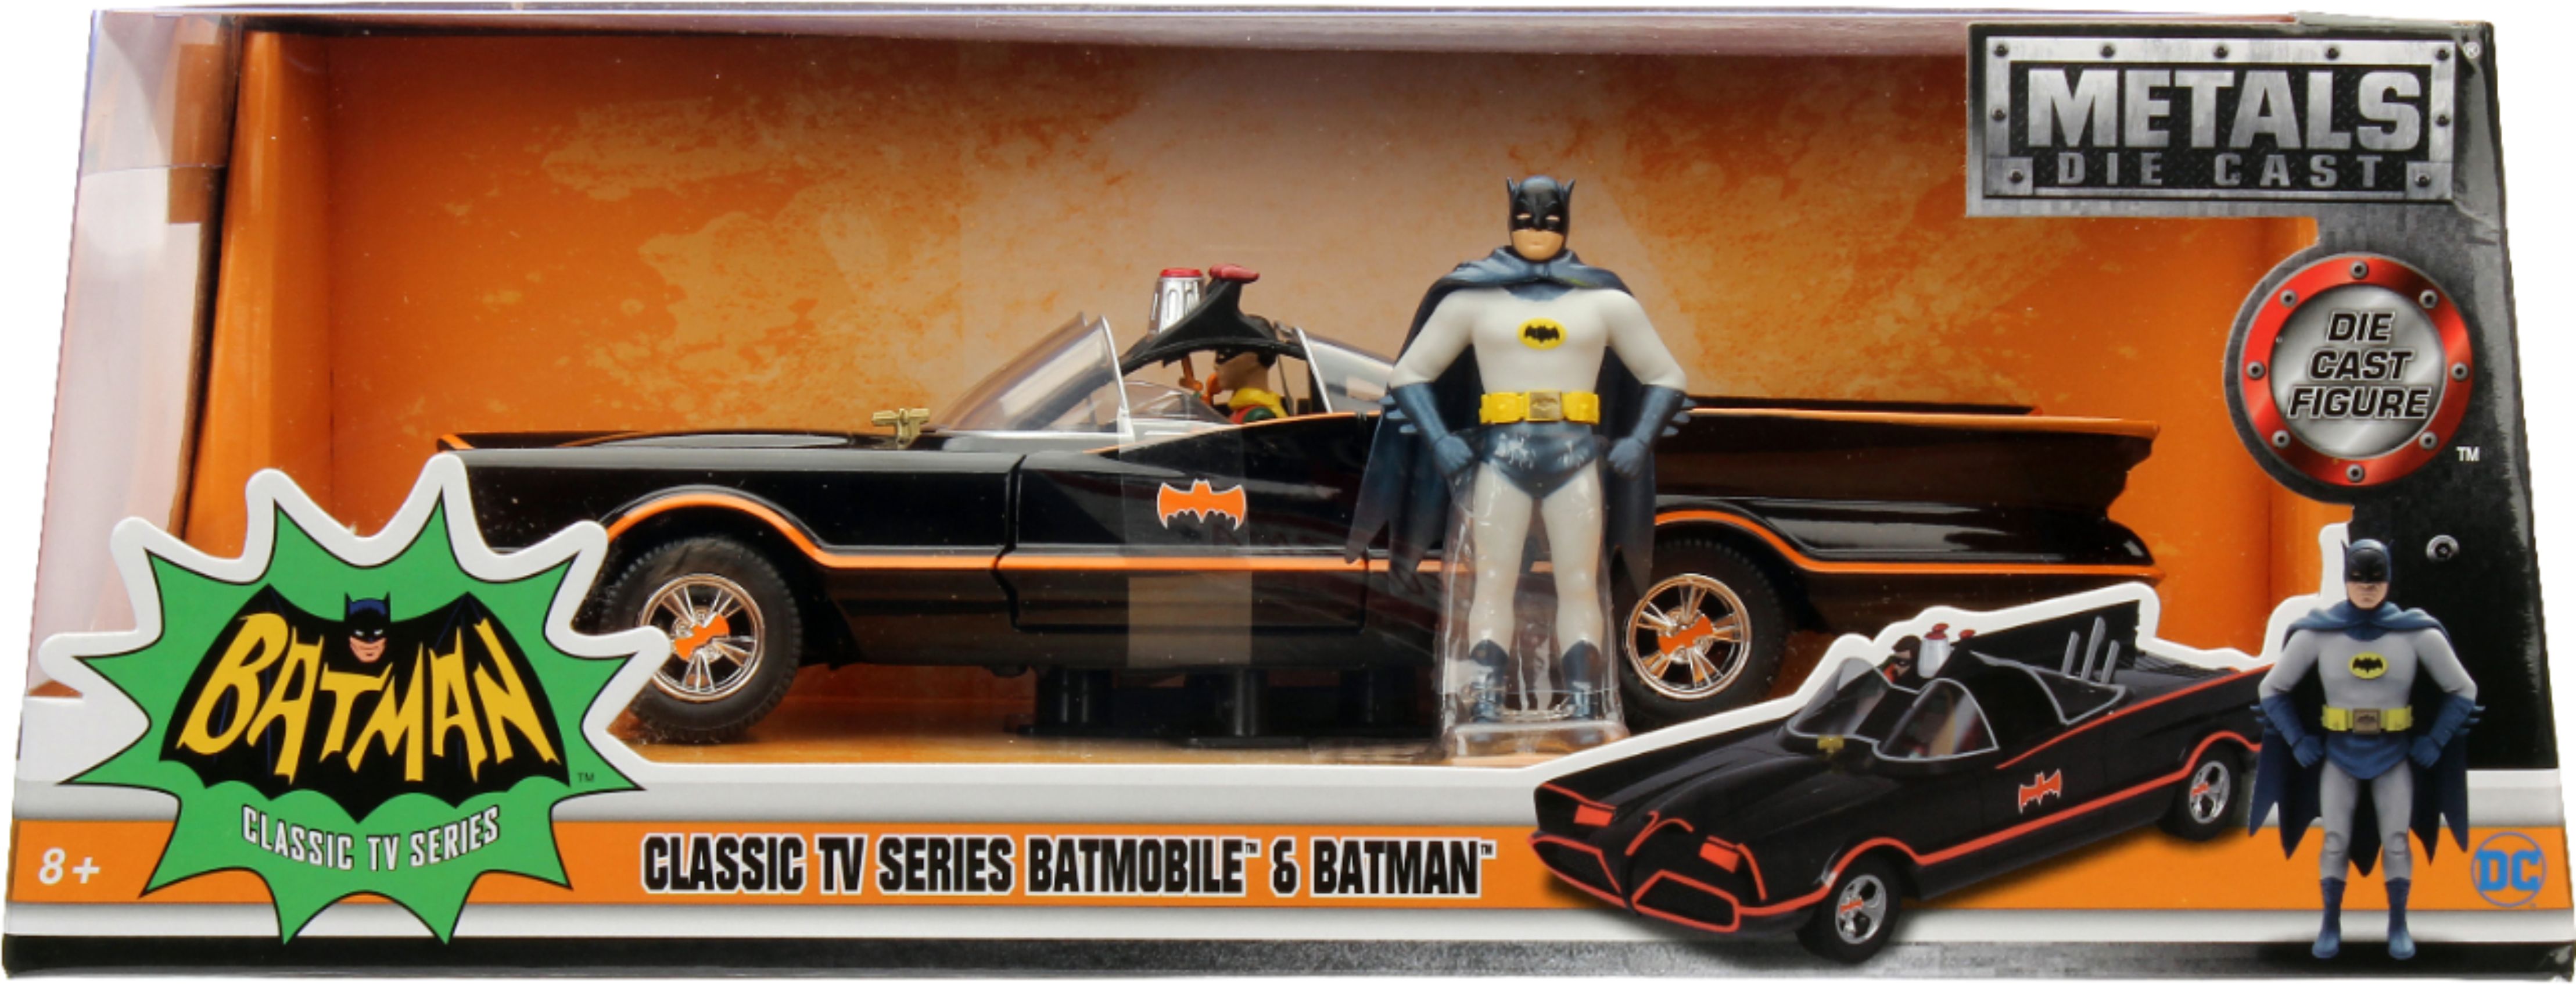 Jada Toys 98259 1966 Classic TV Series Batmobile with Batman and Robin figures 